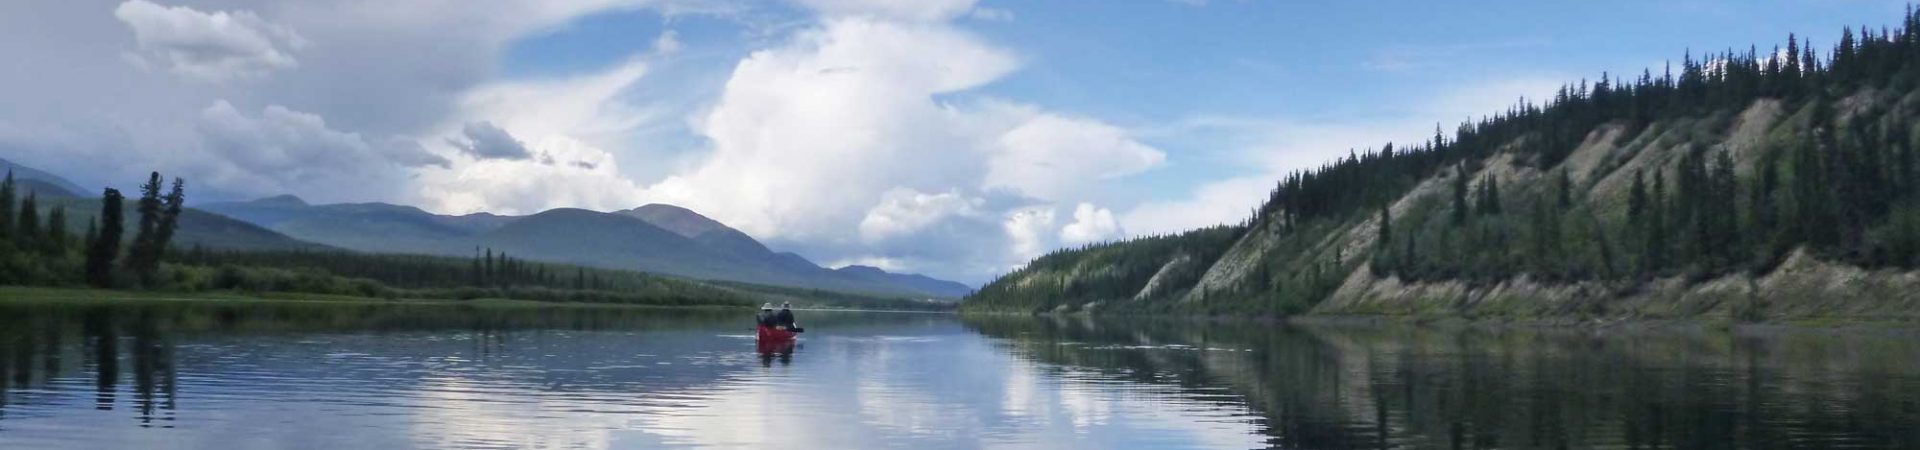 Planning your Yukon River canoe trip